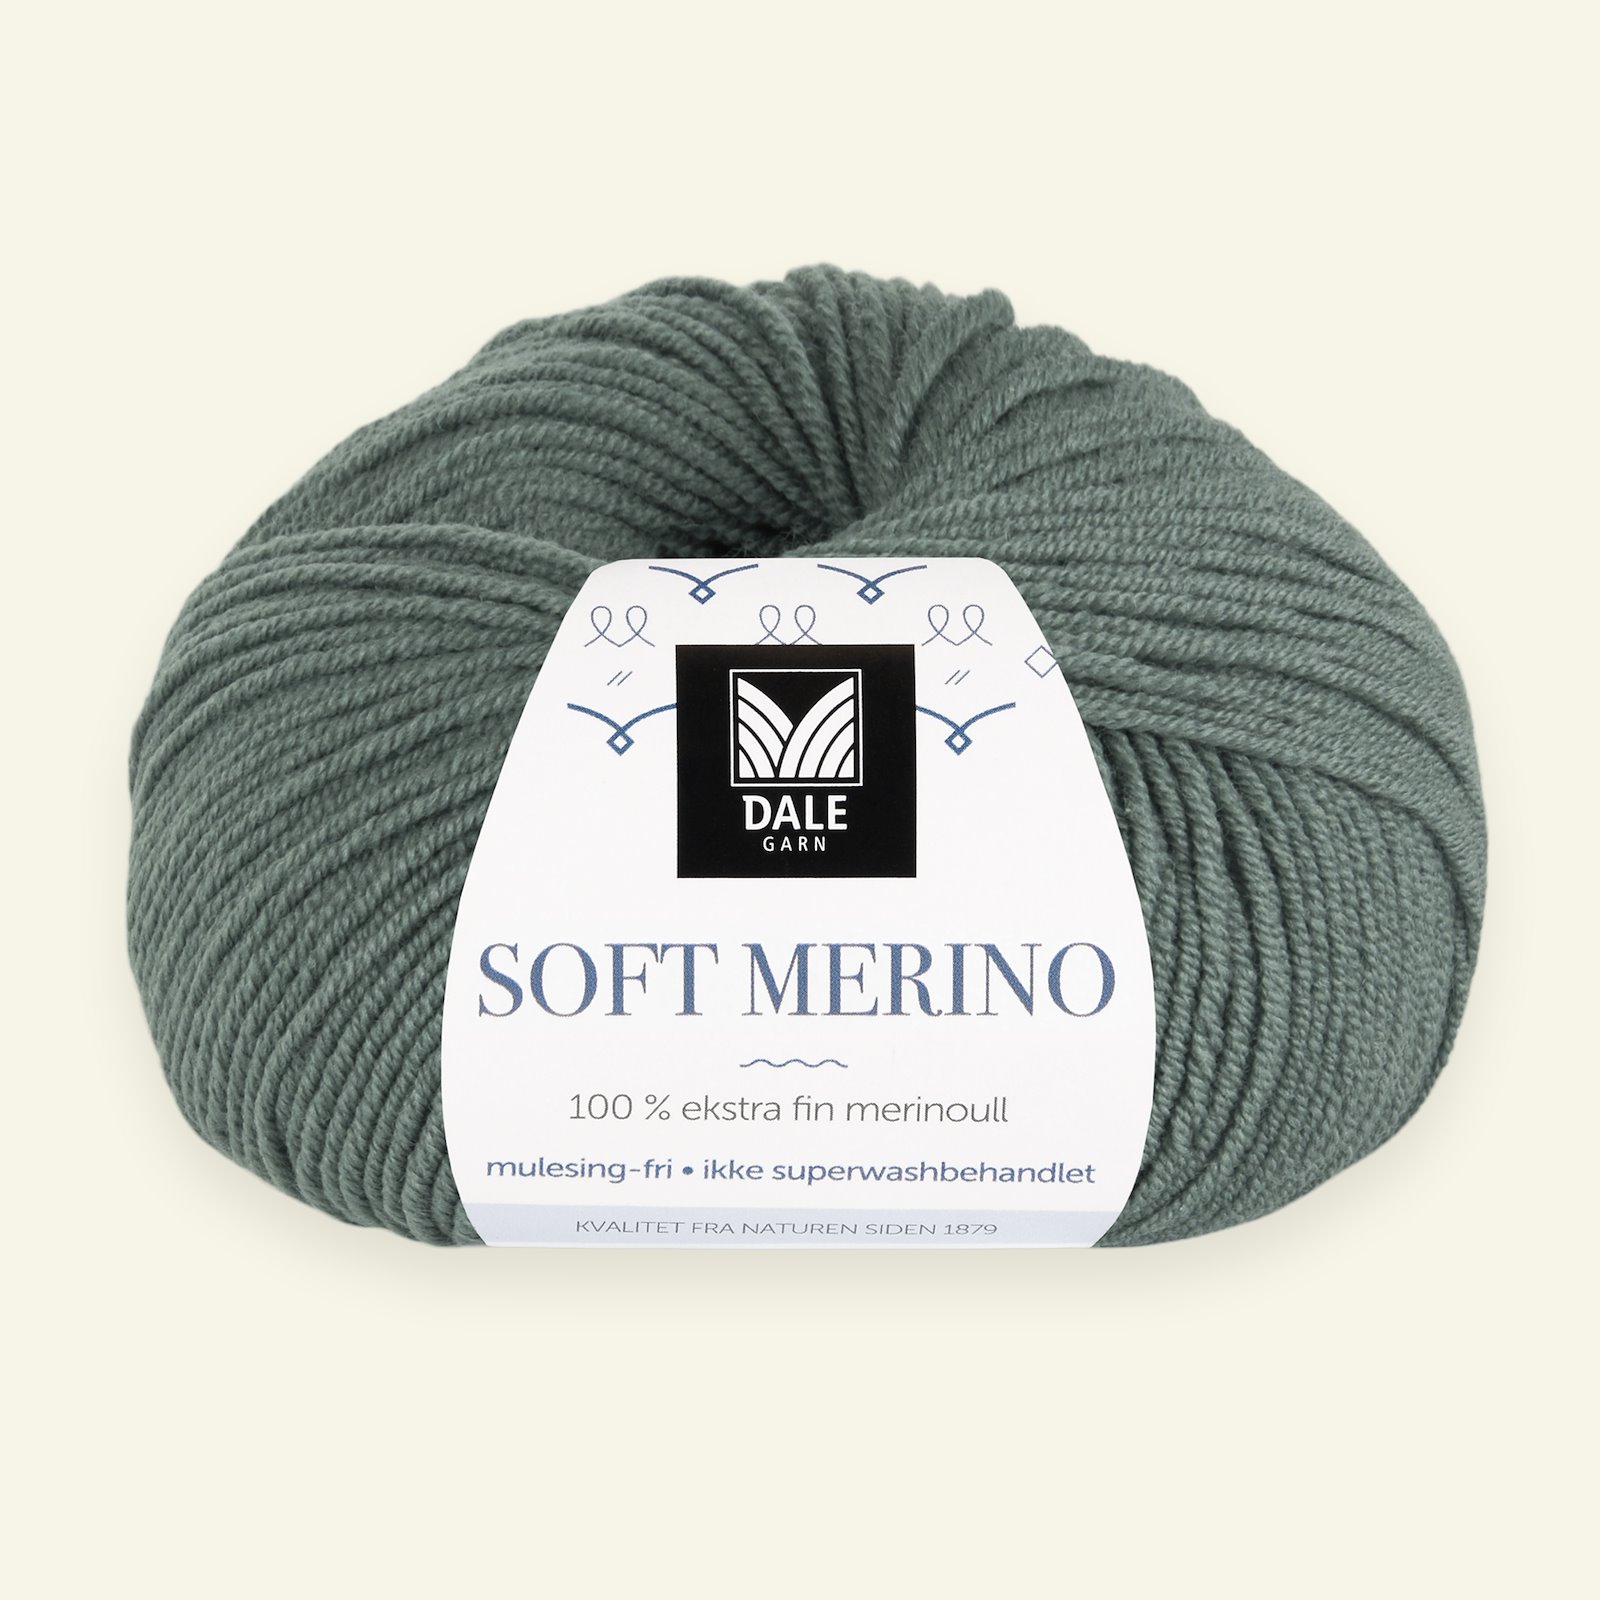 Dale Garn, 100% extra fine merino wool yarn, "Soft Merino", petrol (3013) 90000334_pack